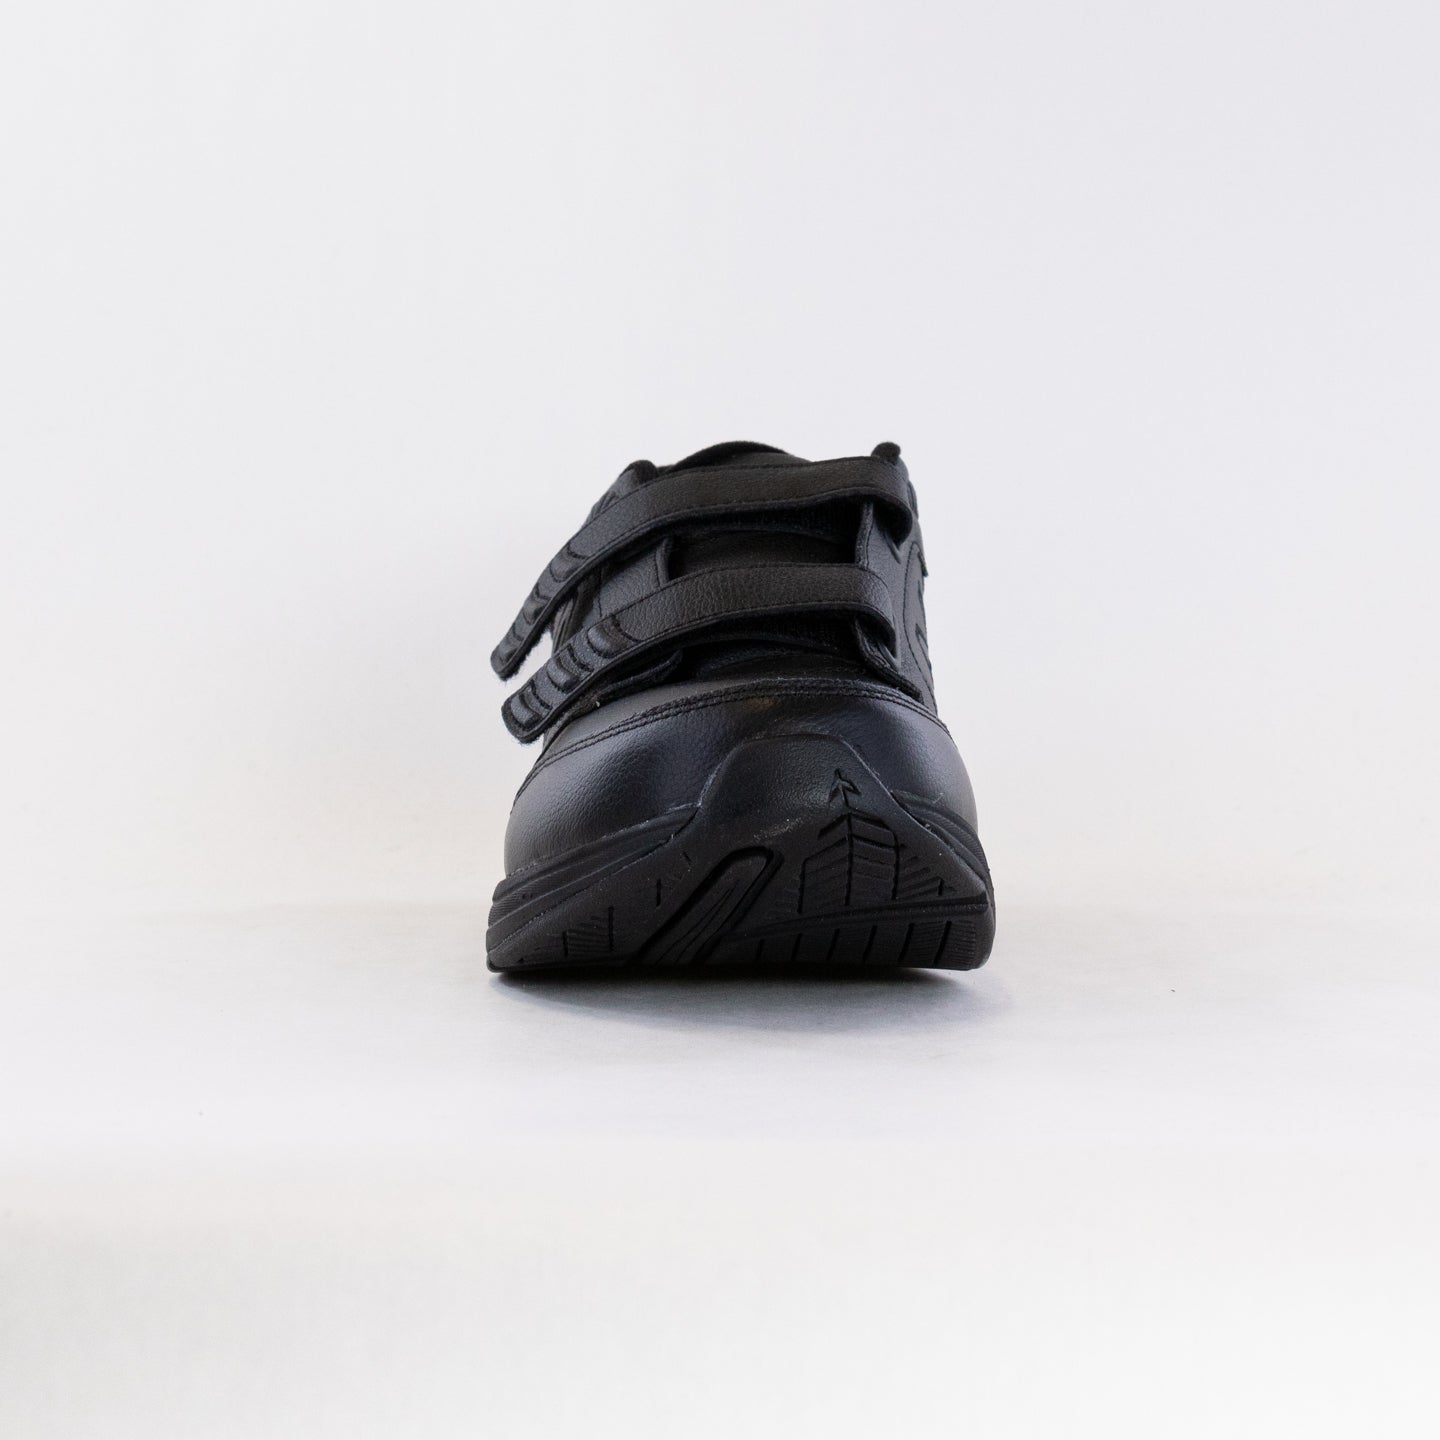 New Balance 928HB3 (Men's) - Black Leather